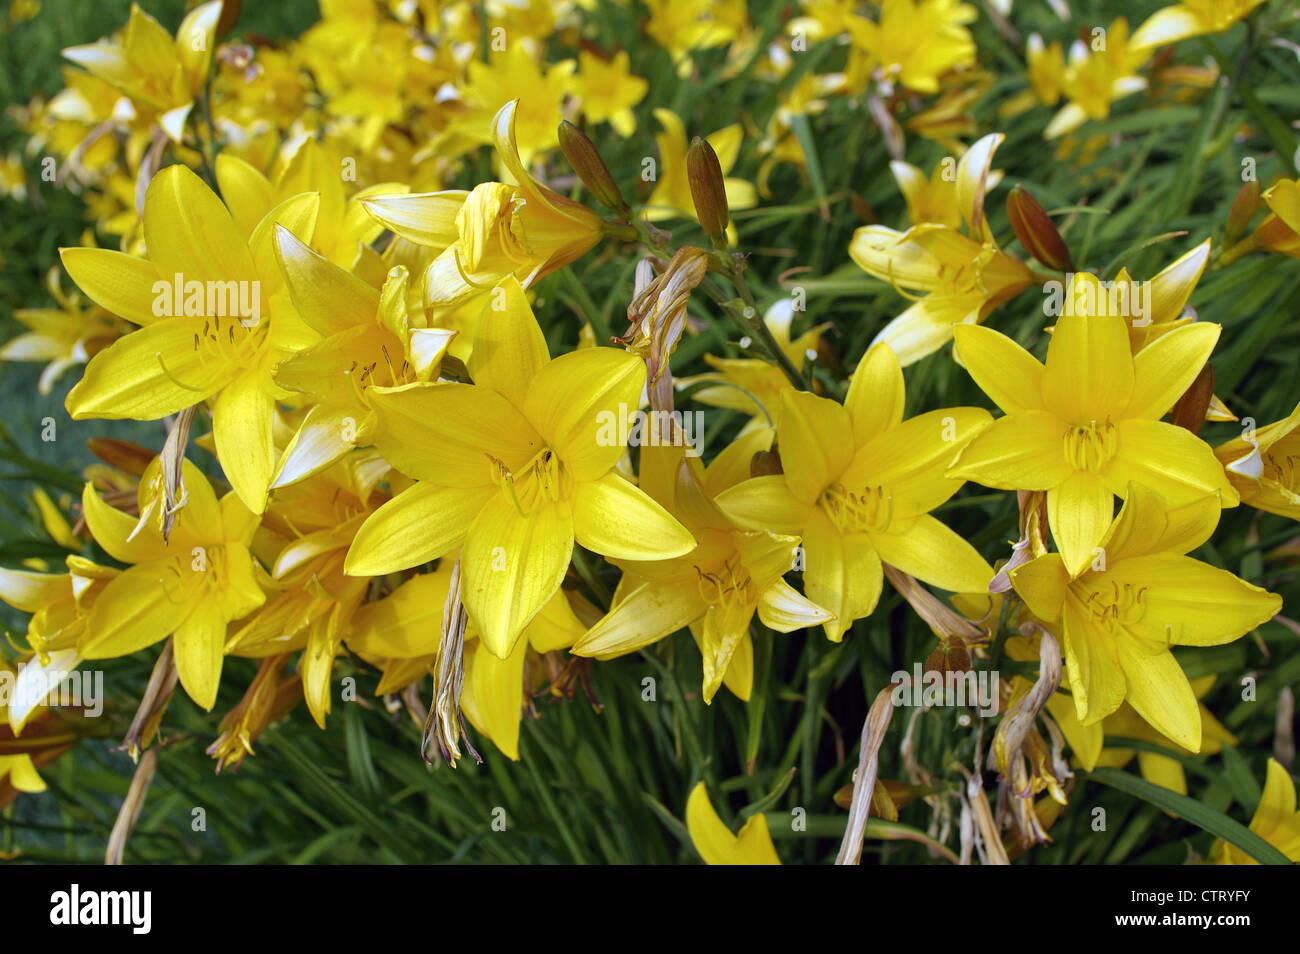 Yellow daylily flowers Hemerocallis lilioasphodelus Stock Photo